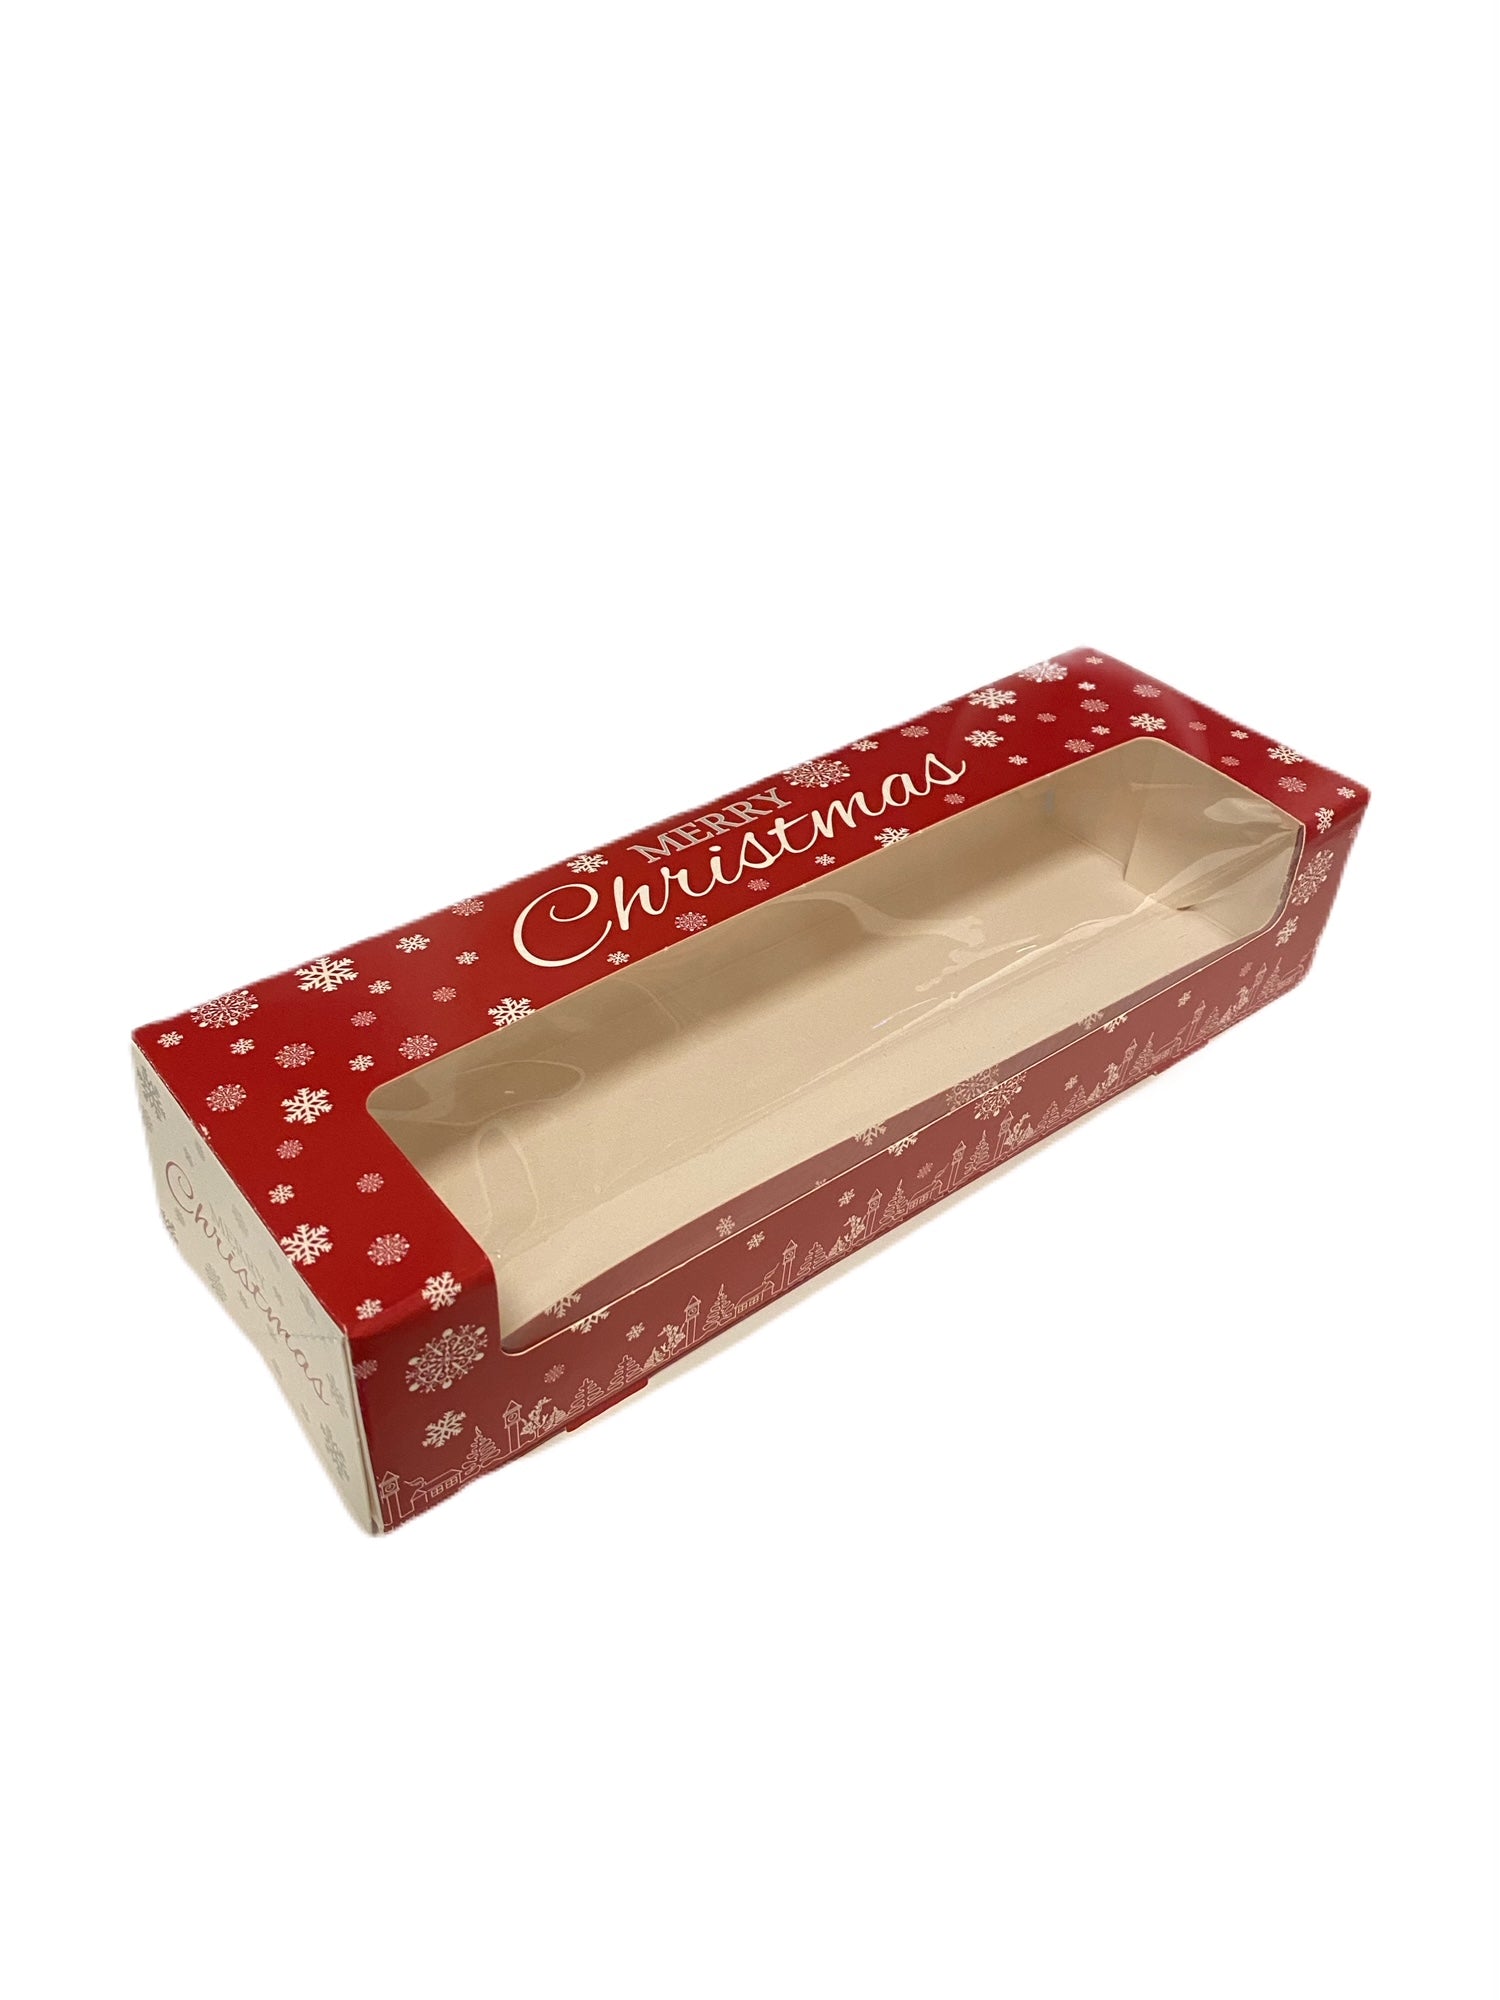 Christmas Snowflake Mince Pie Box - The Cooks Cupboard Ltd